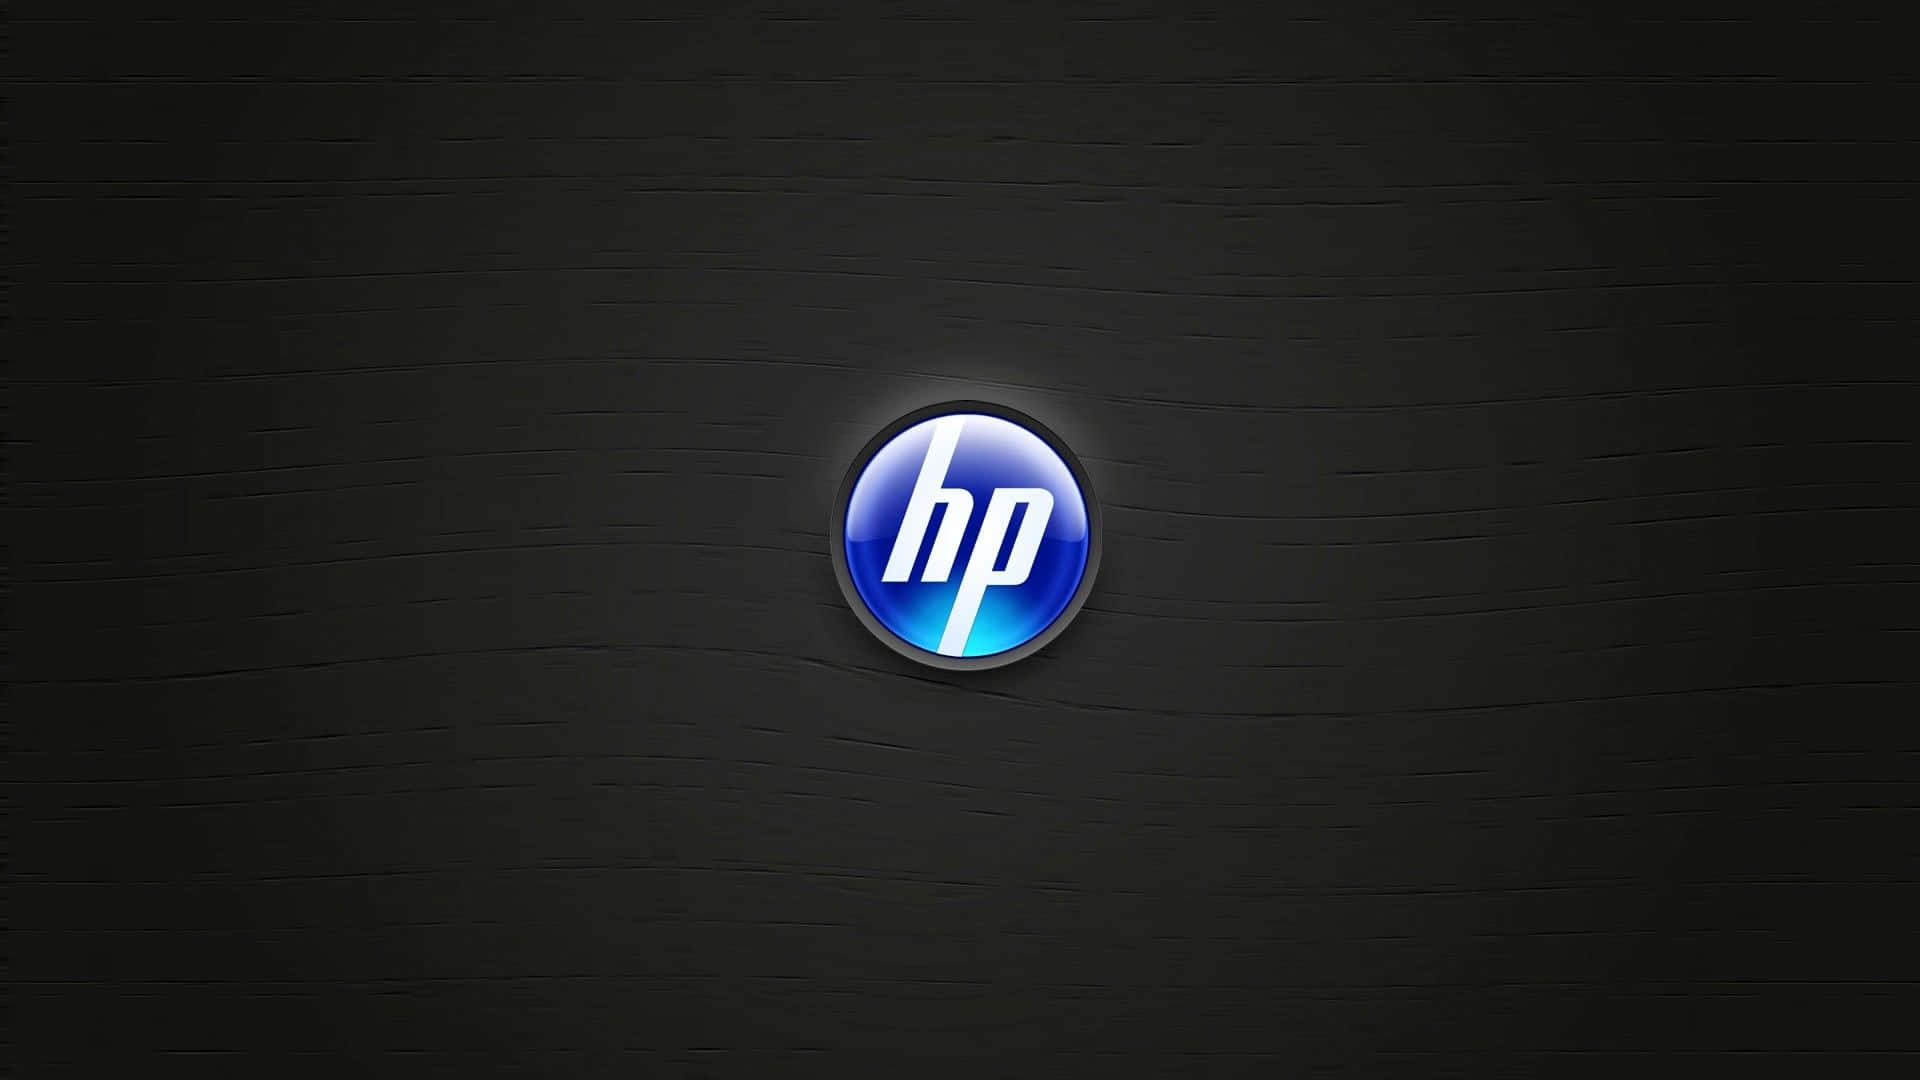 High Performance on HP